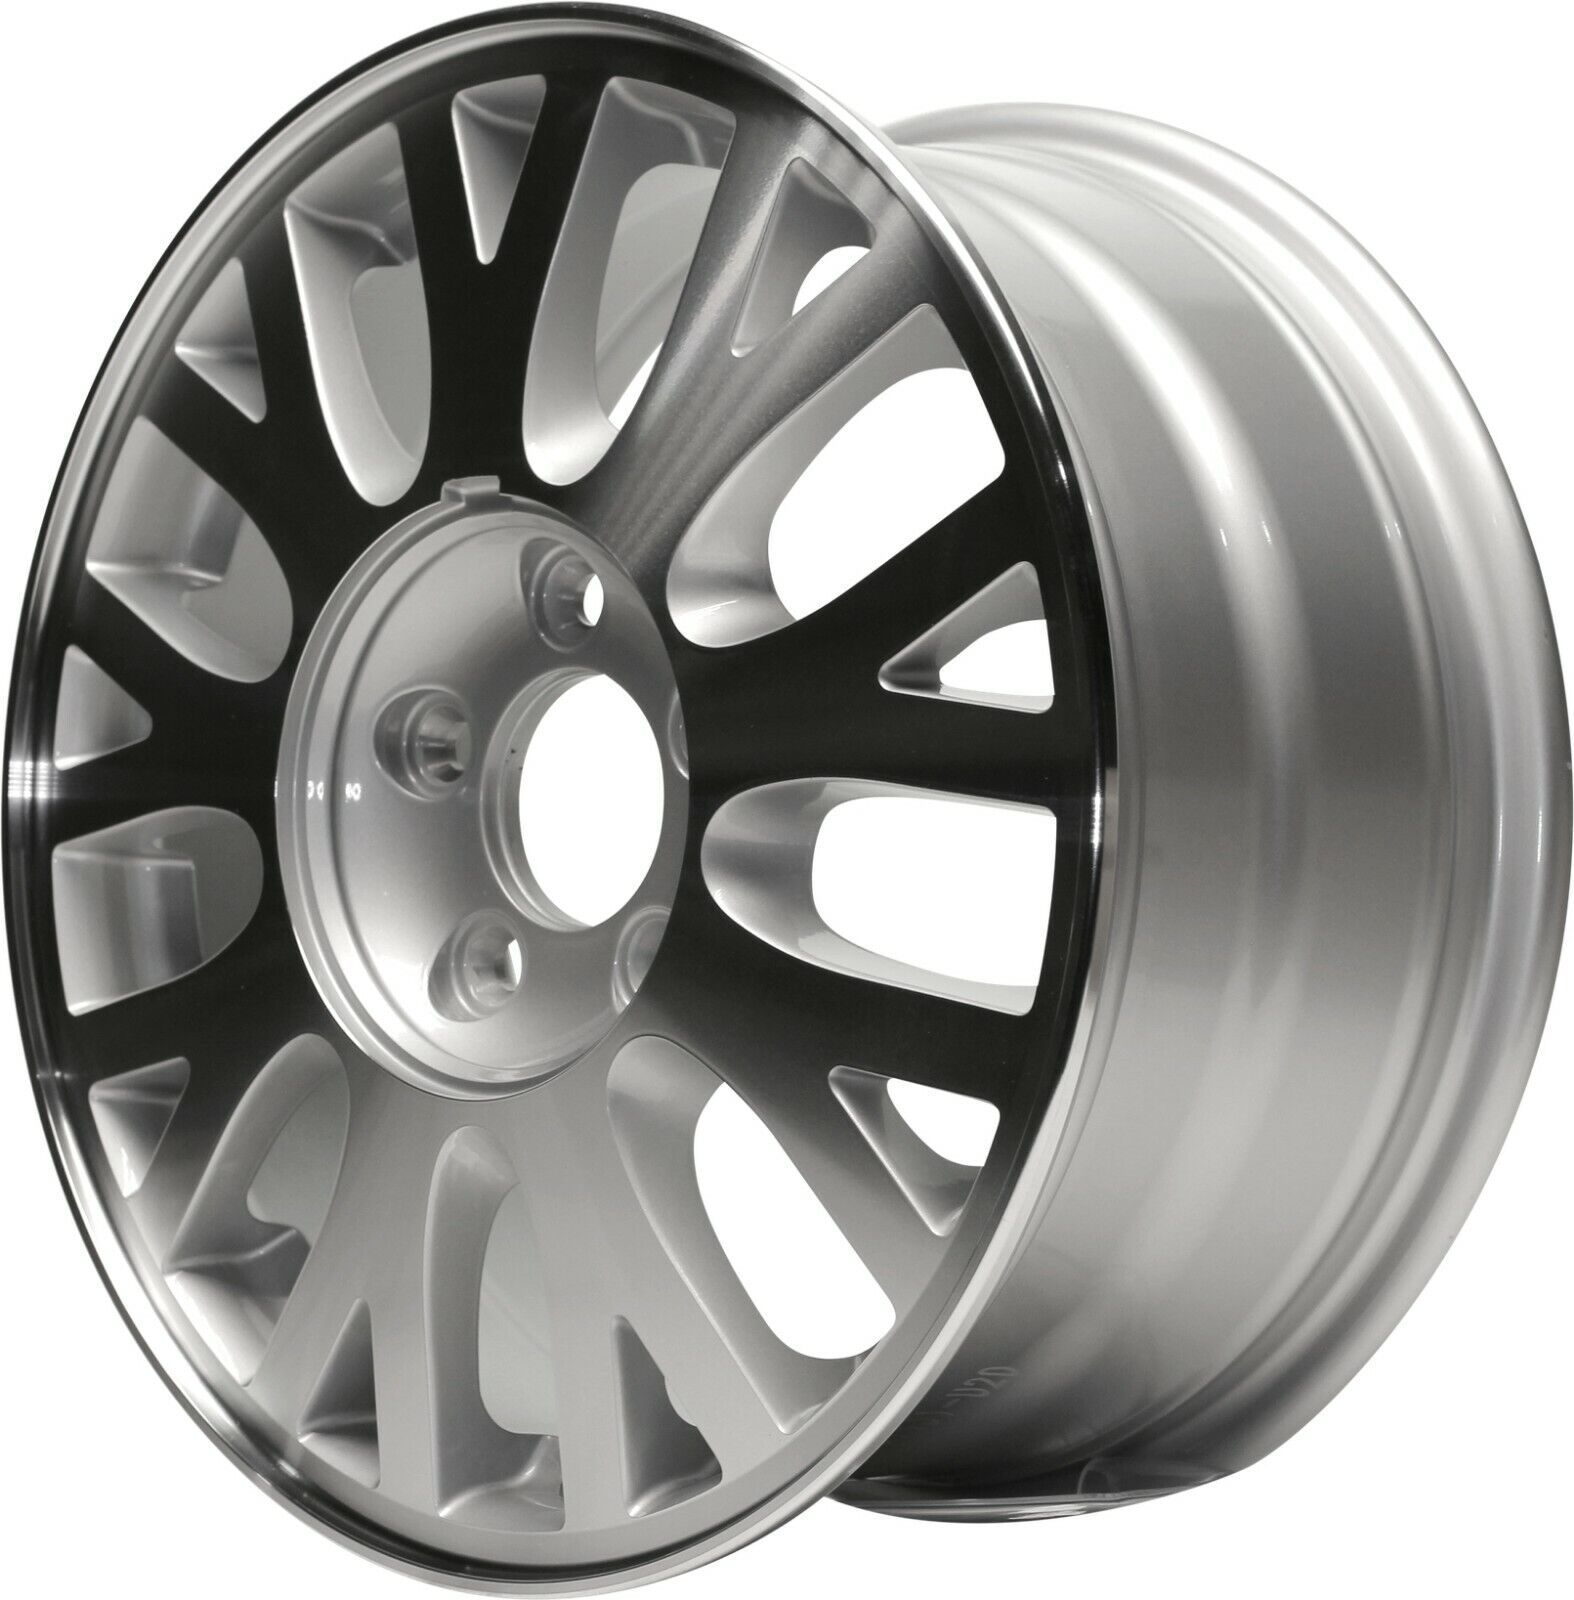 Aluminum Alloy Wheel Rim 16 Inch 03-05 Ford Crown Victoria 5-114.3mm 18 Spokes